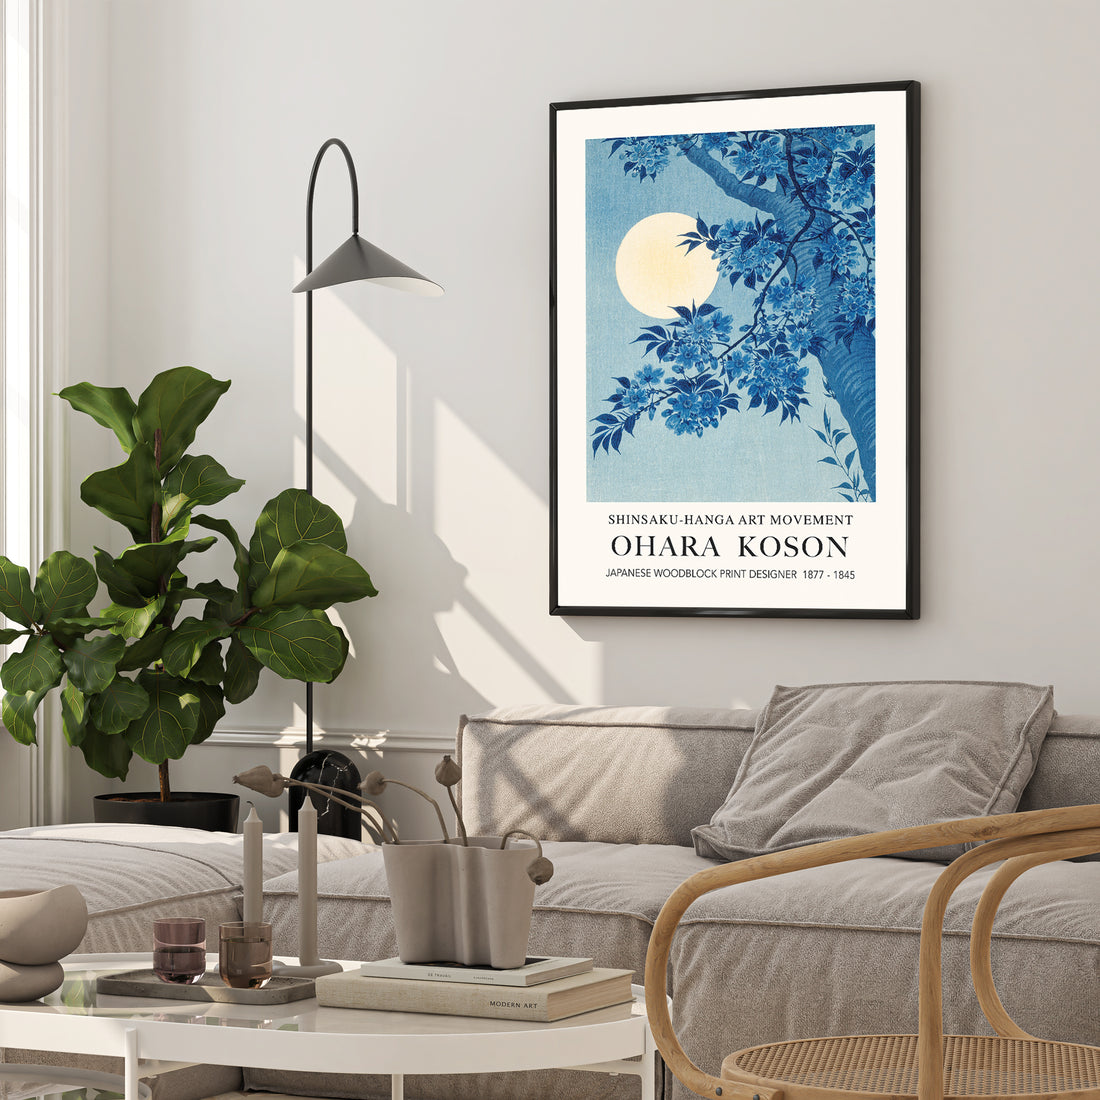 Ohara Kason Exhibition Print - The Moon